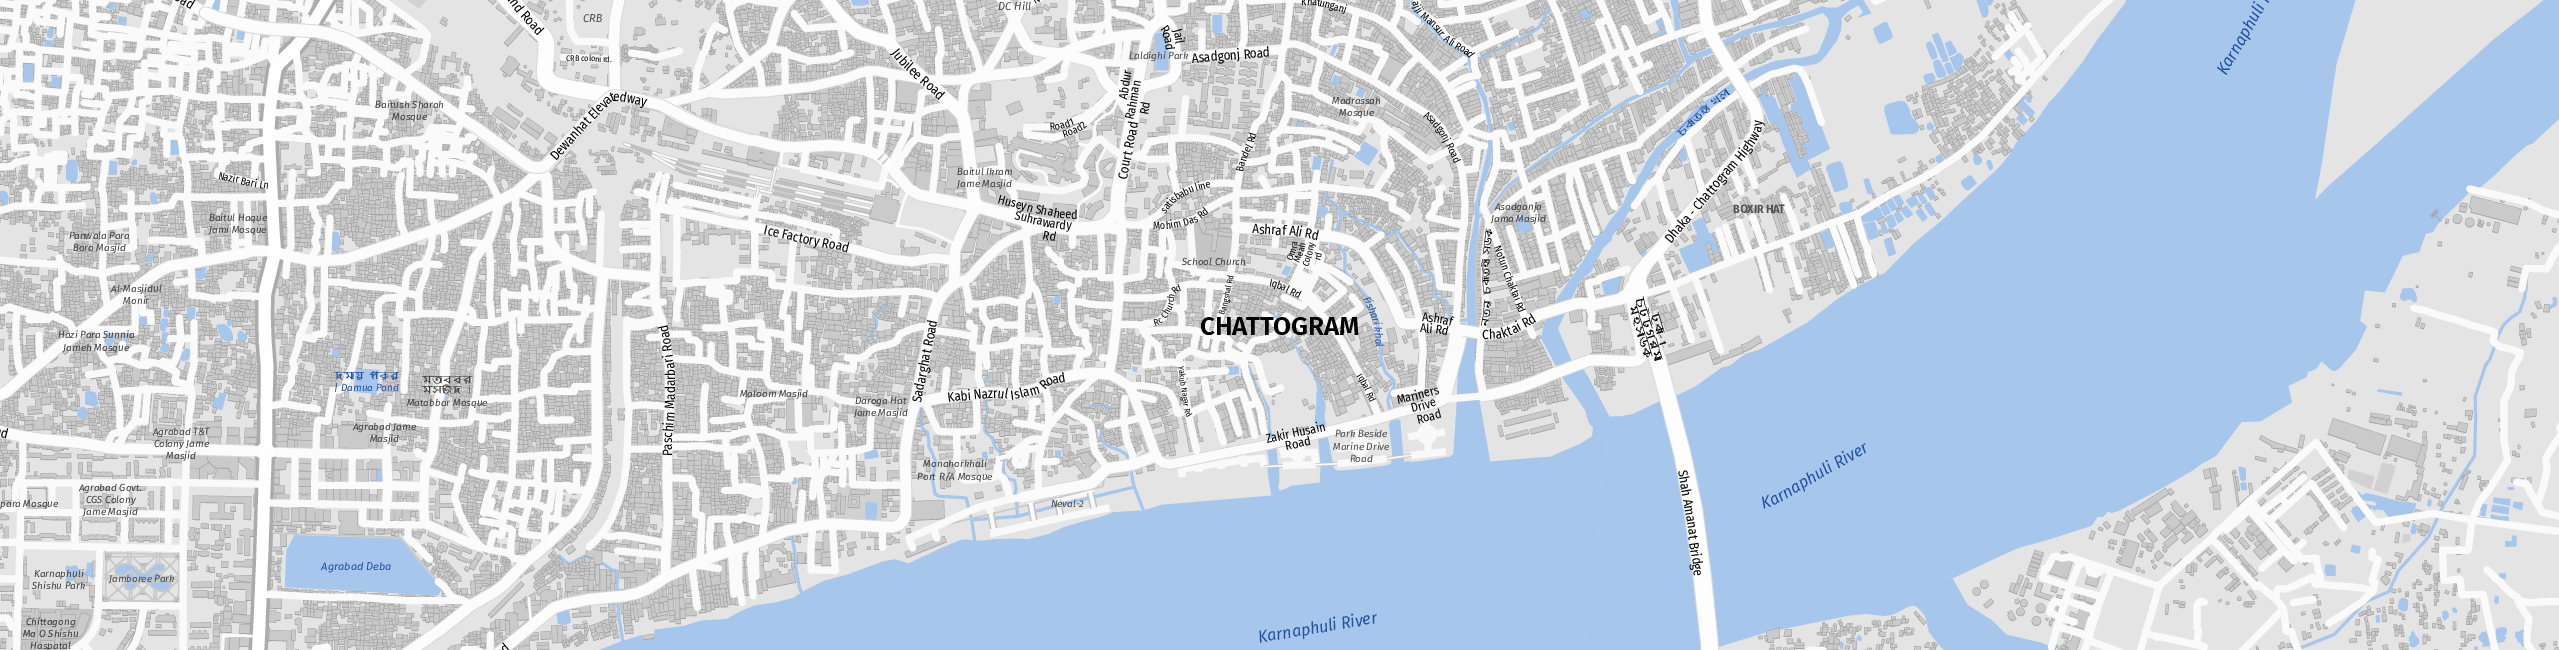 Stadtplan Chittagong zum Downloaden.